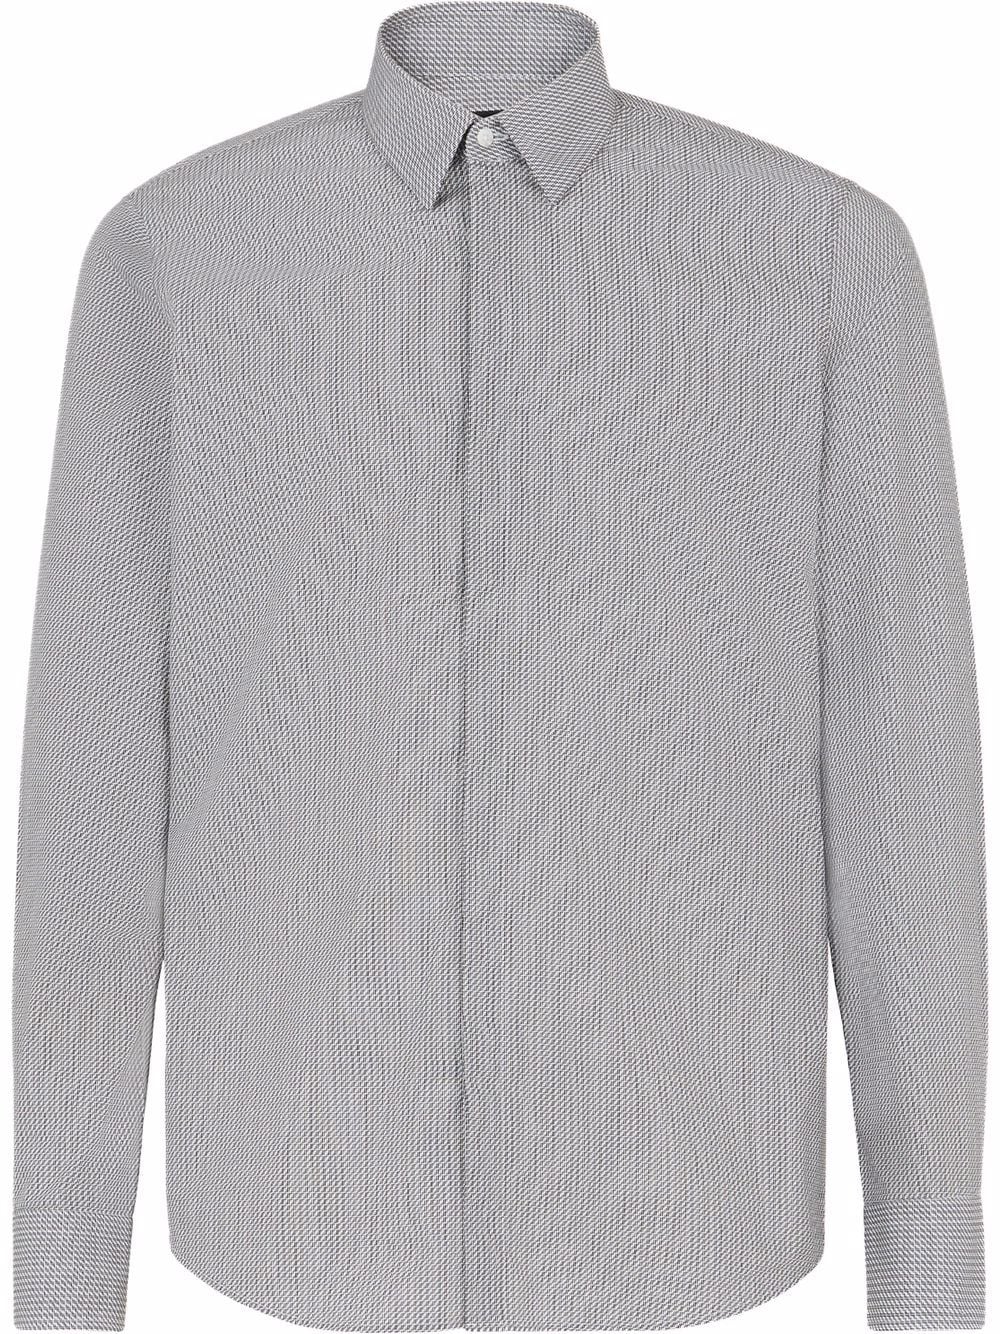 FF-pattern cotton shirt